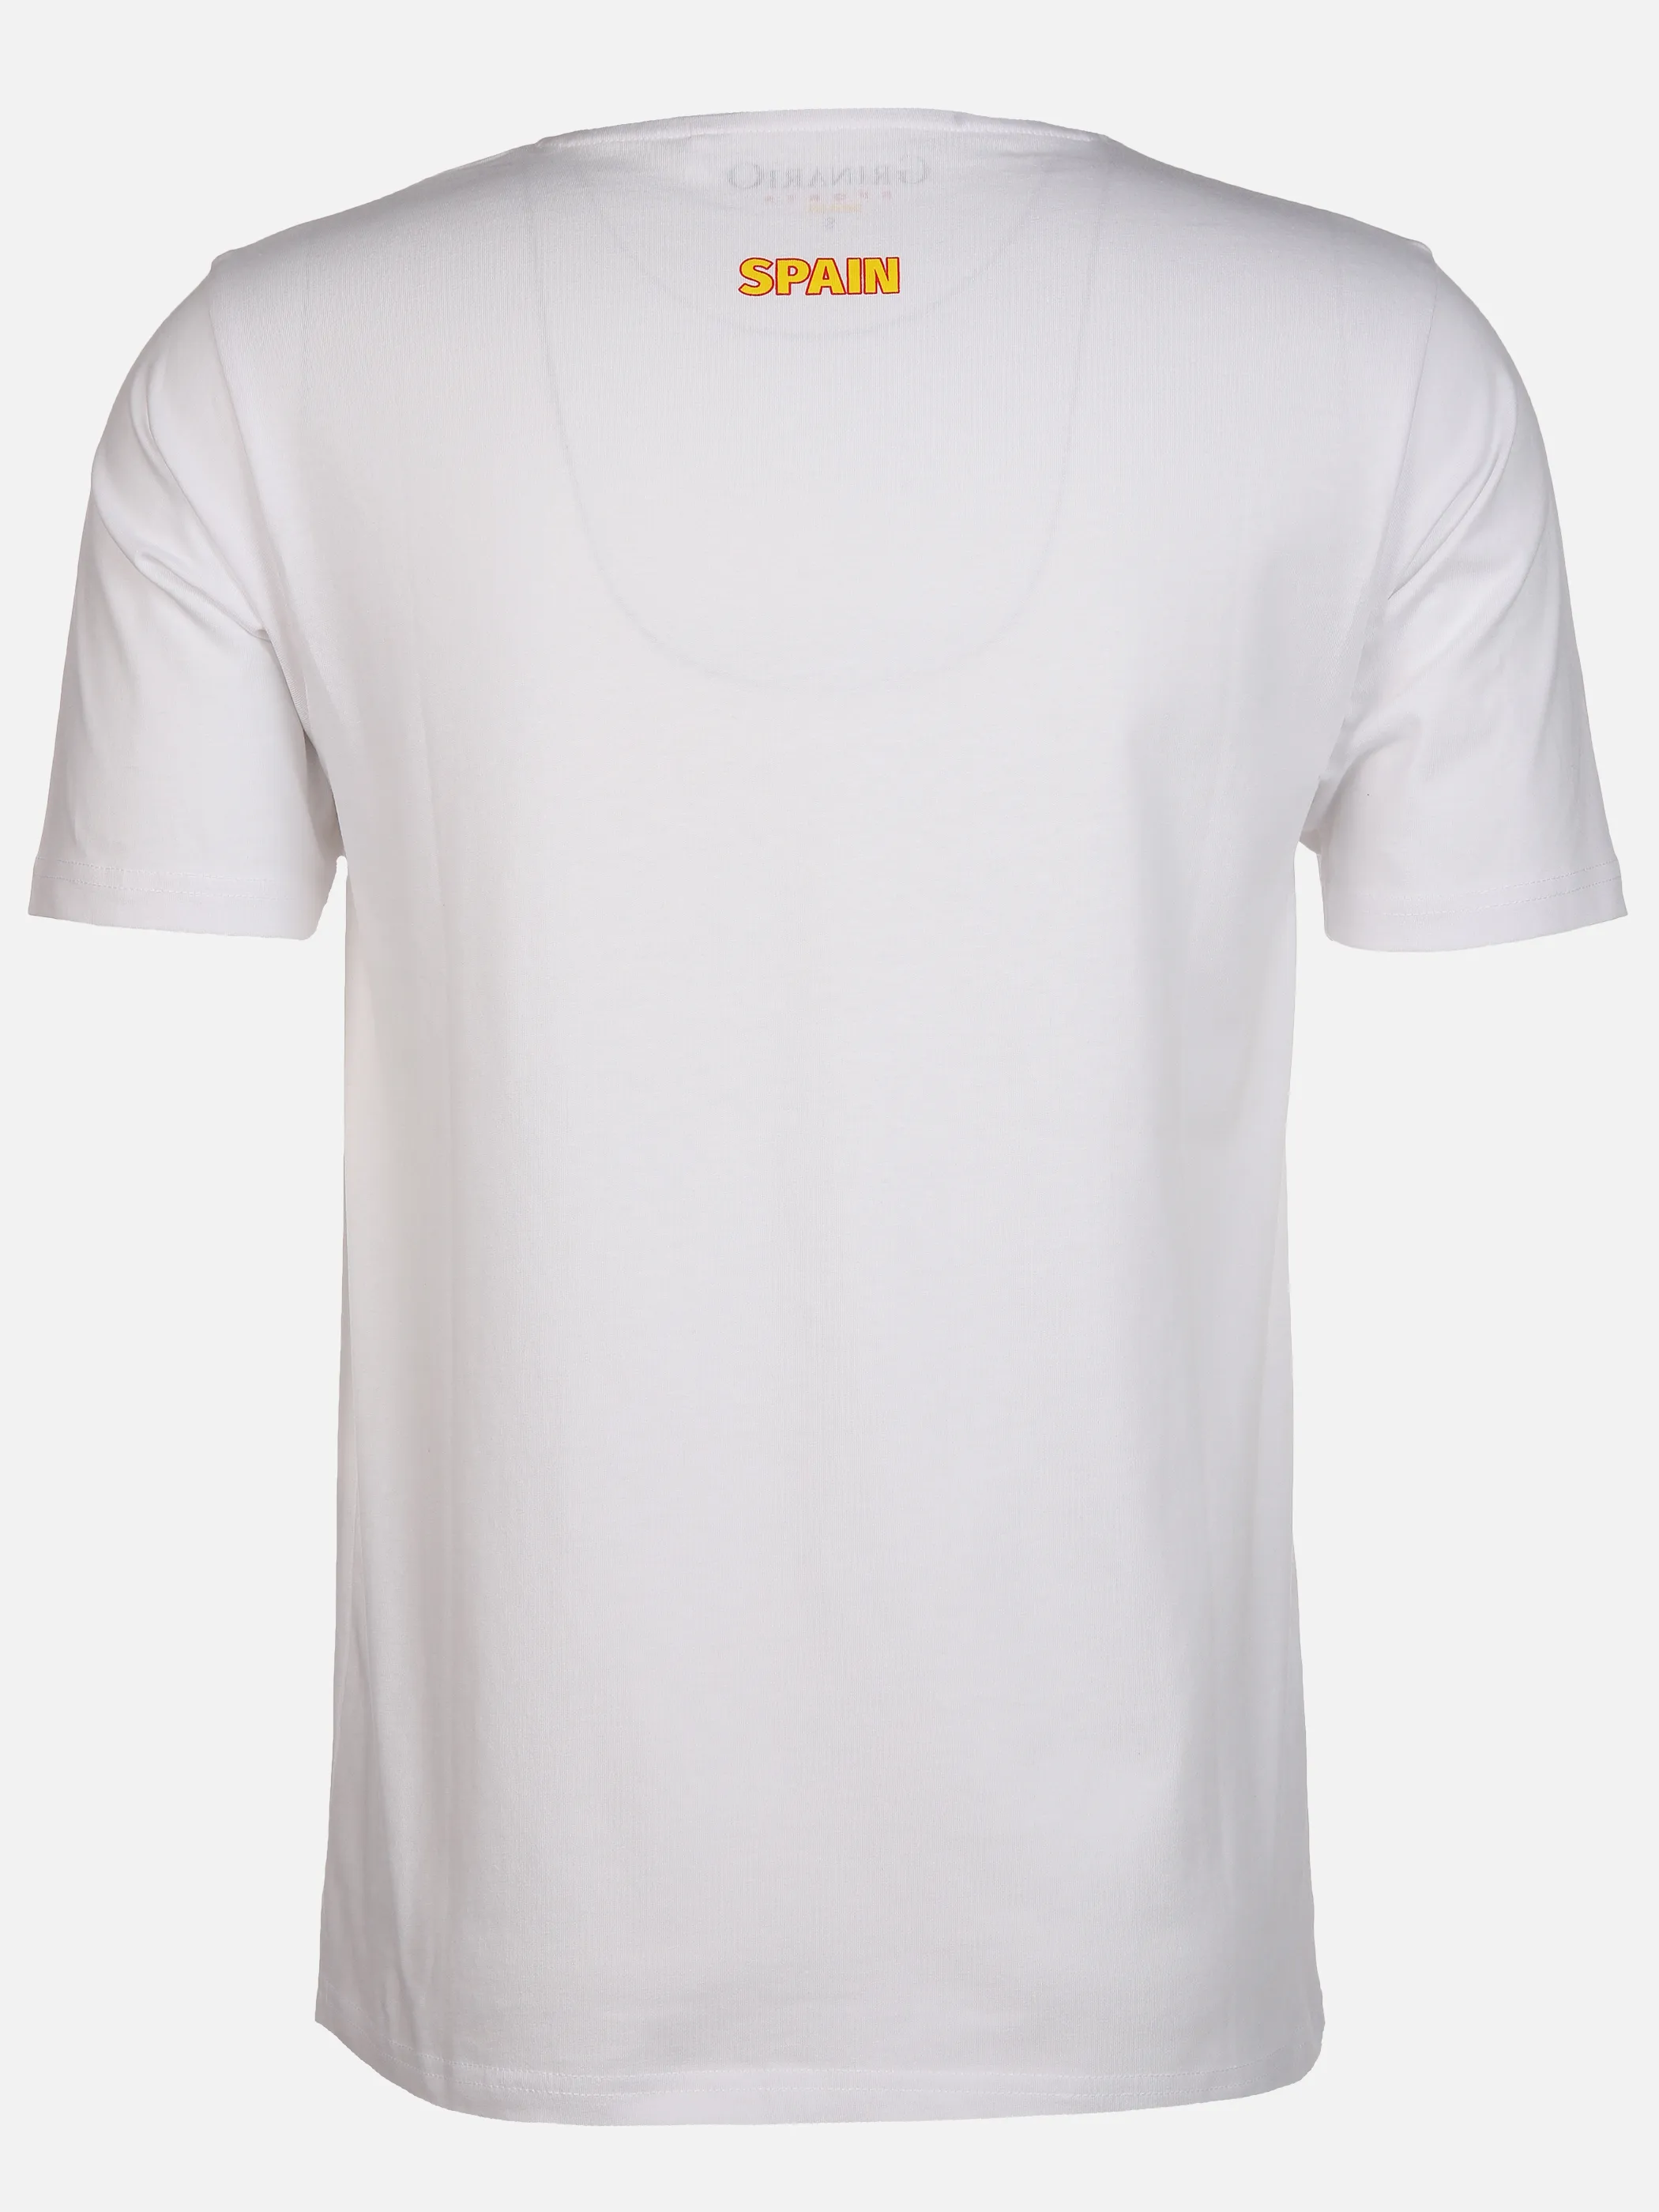 Grinario Sports Unisex T-Shirt EM24 Weiß 889225 W2 2